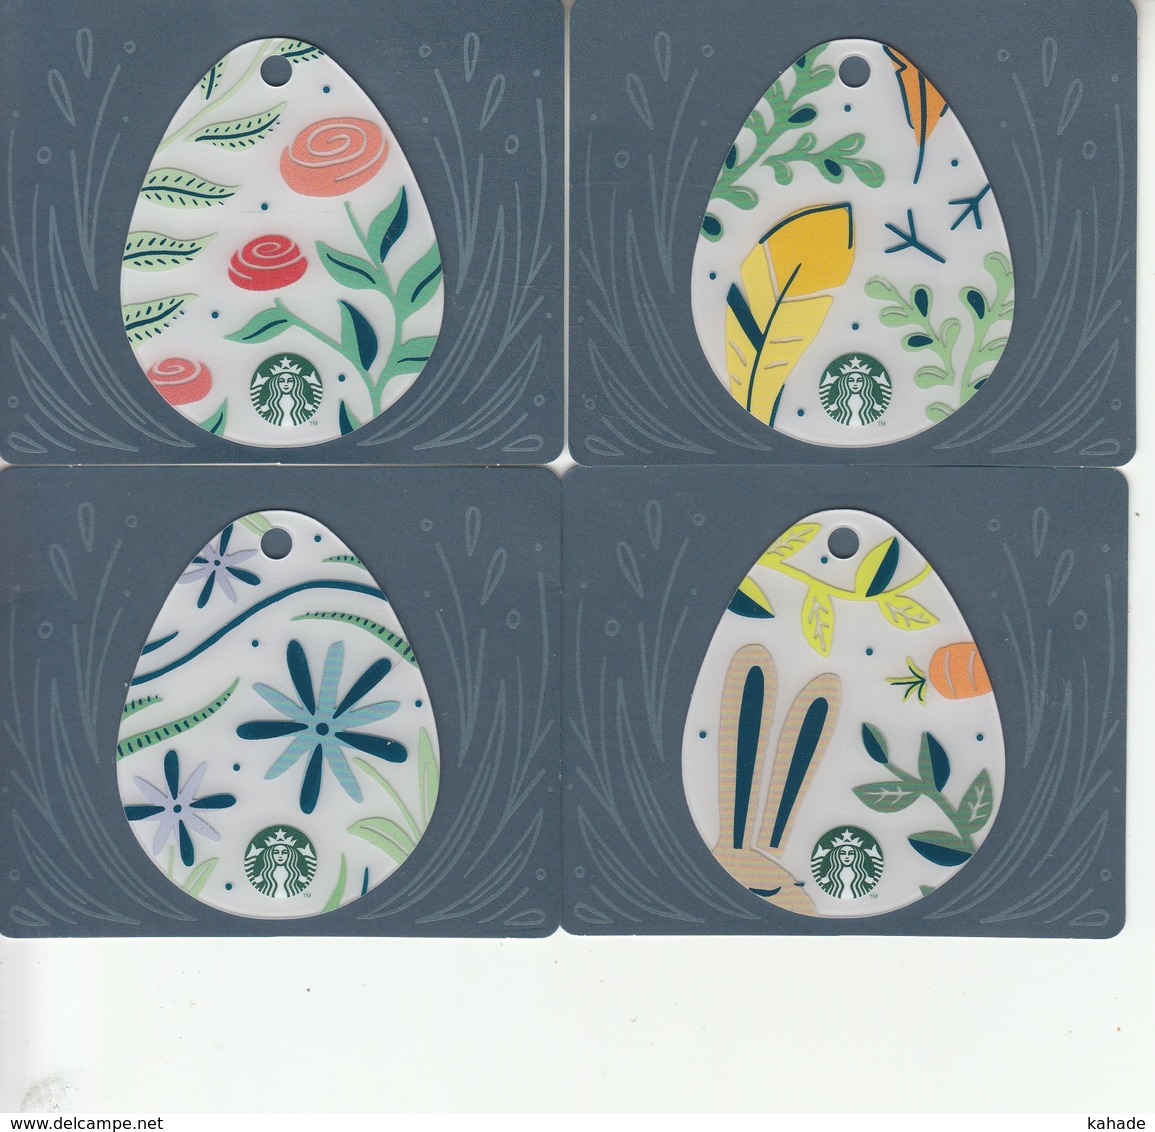 4 X Thailand Starbucks Card  "Eggs " - 2017-6148 - Gift Cards